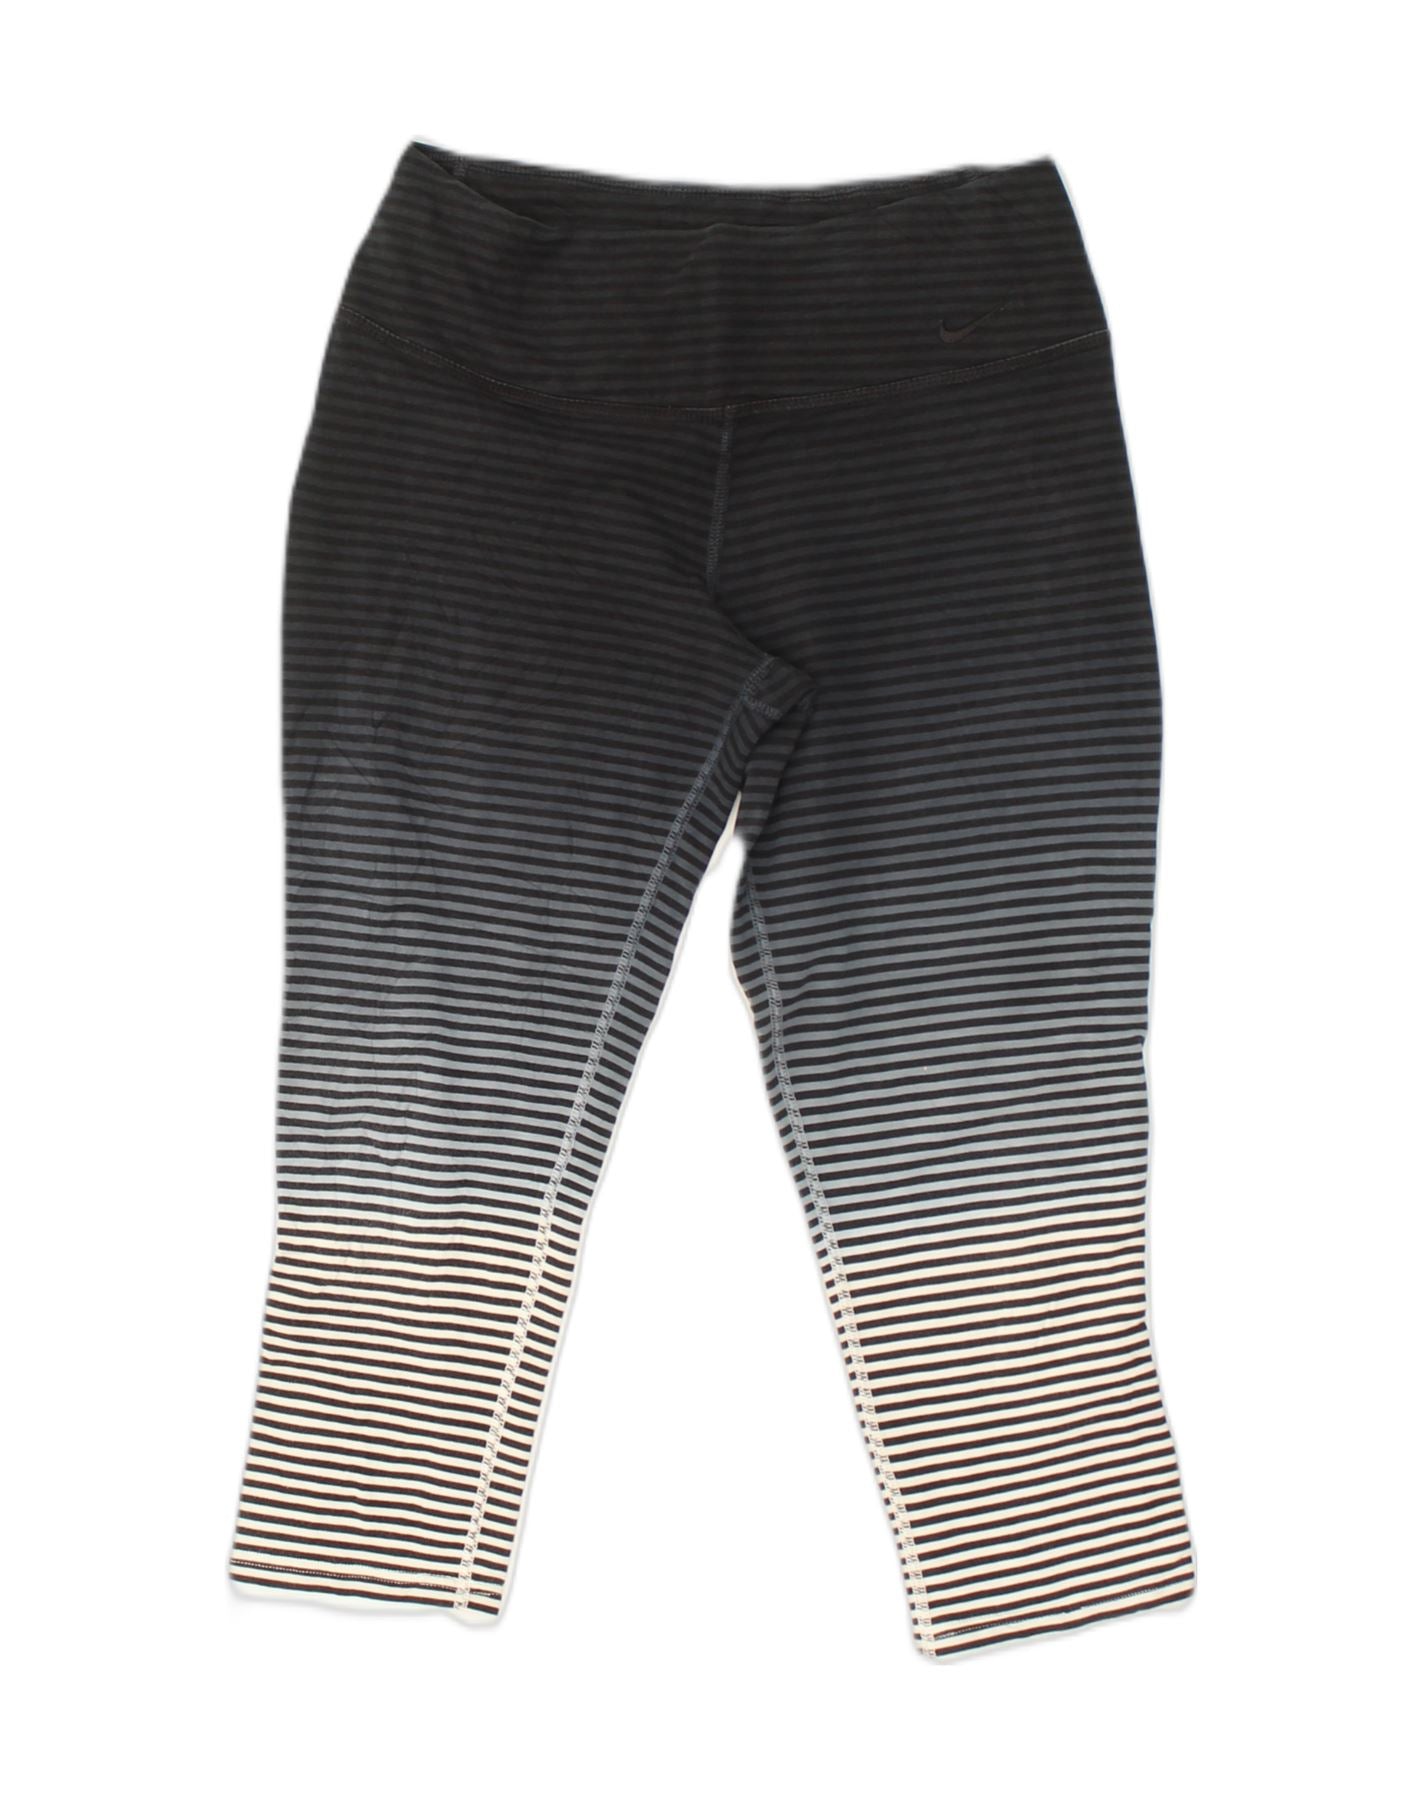 NIKE Womens Dri Fit Capri Leggings Small Black Pinstripe Cotton, Vintage &  Second-Hand Clothing Online